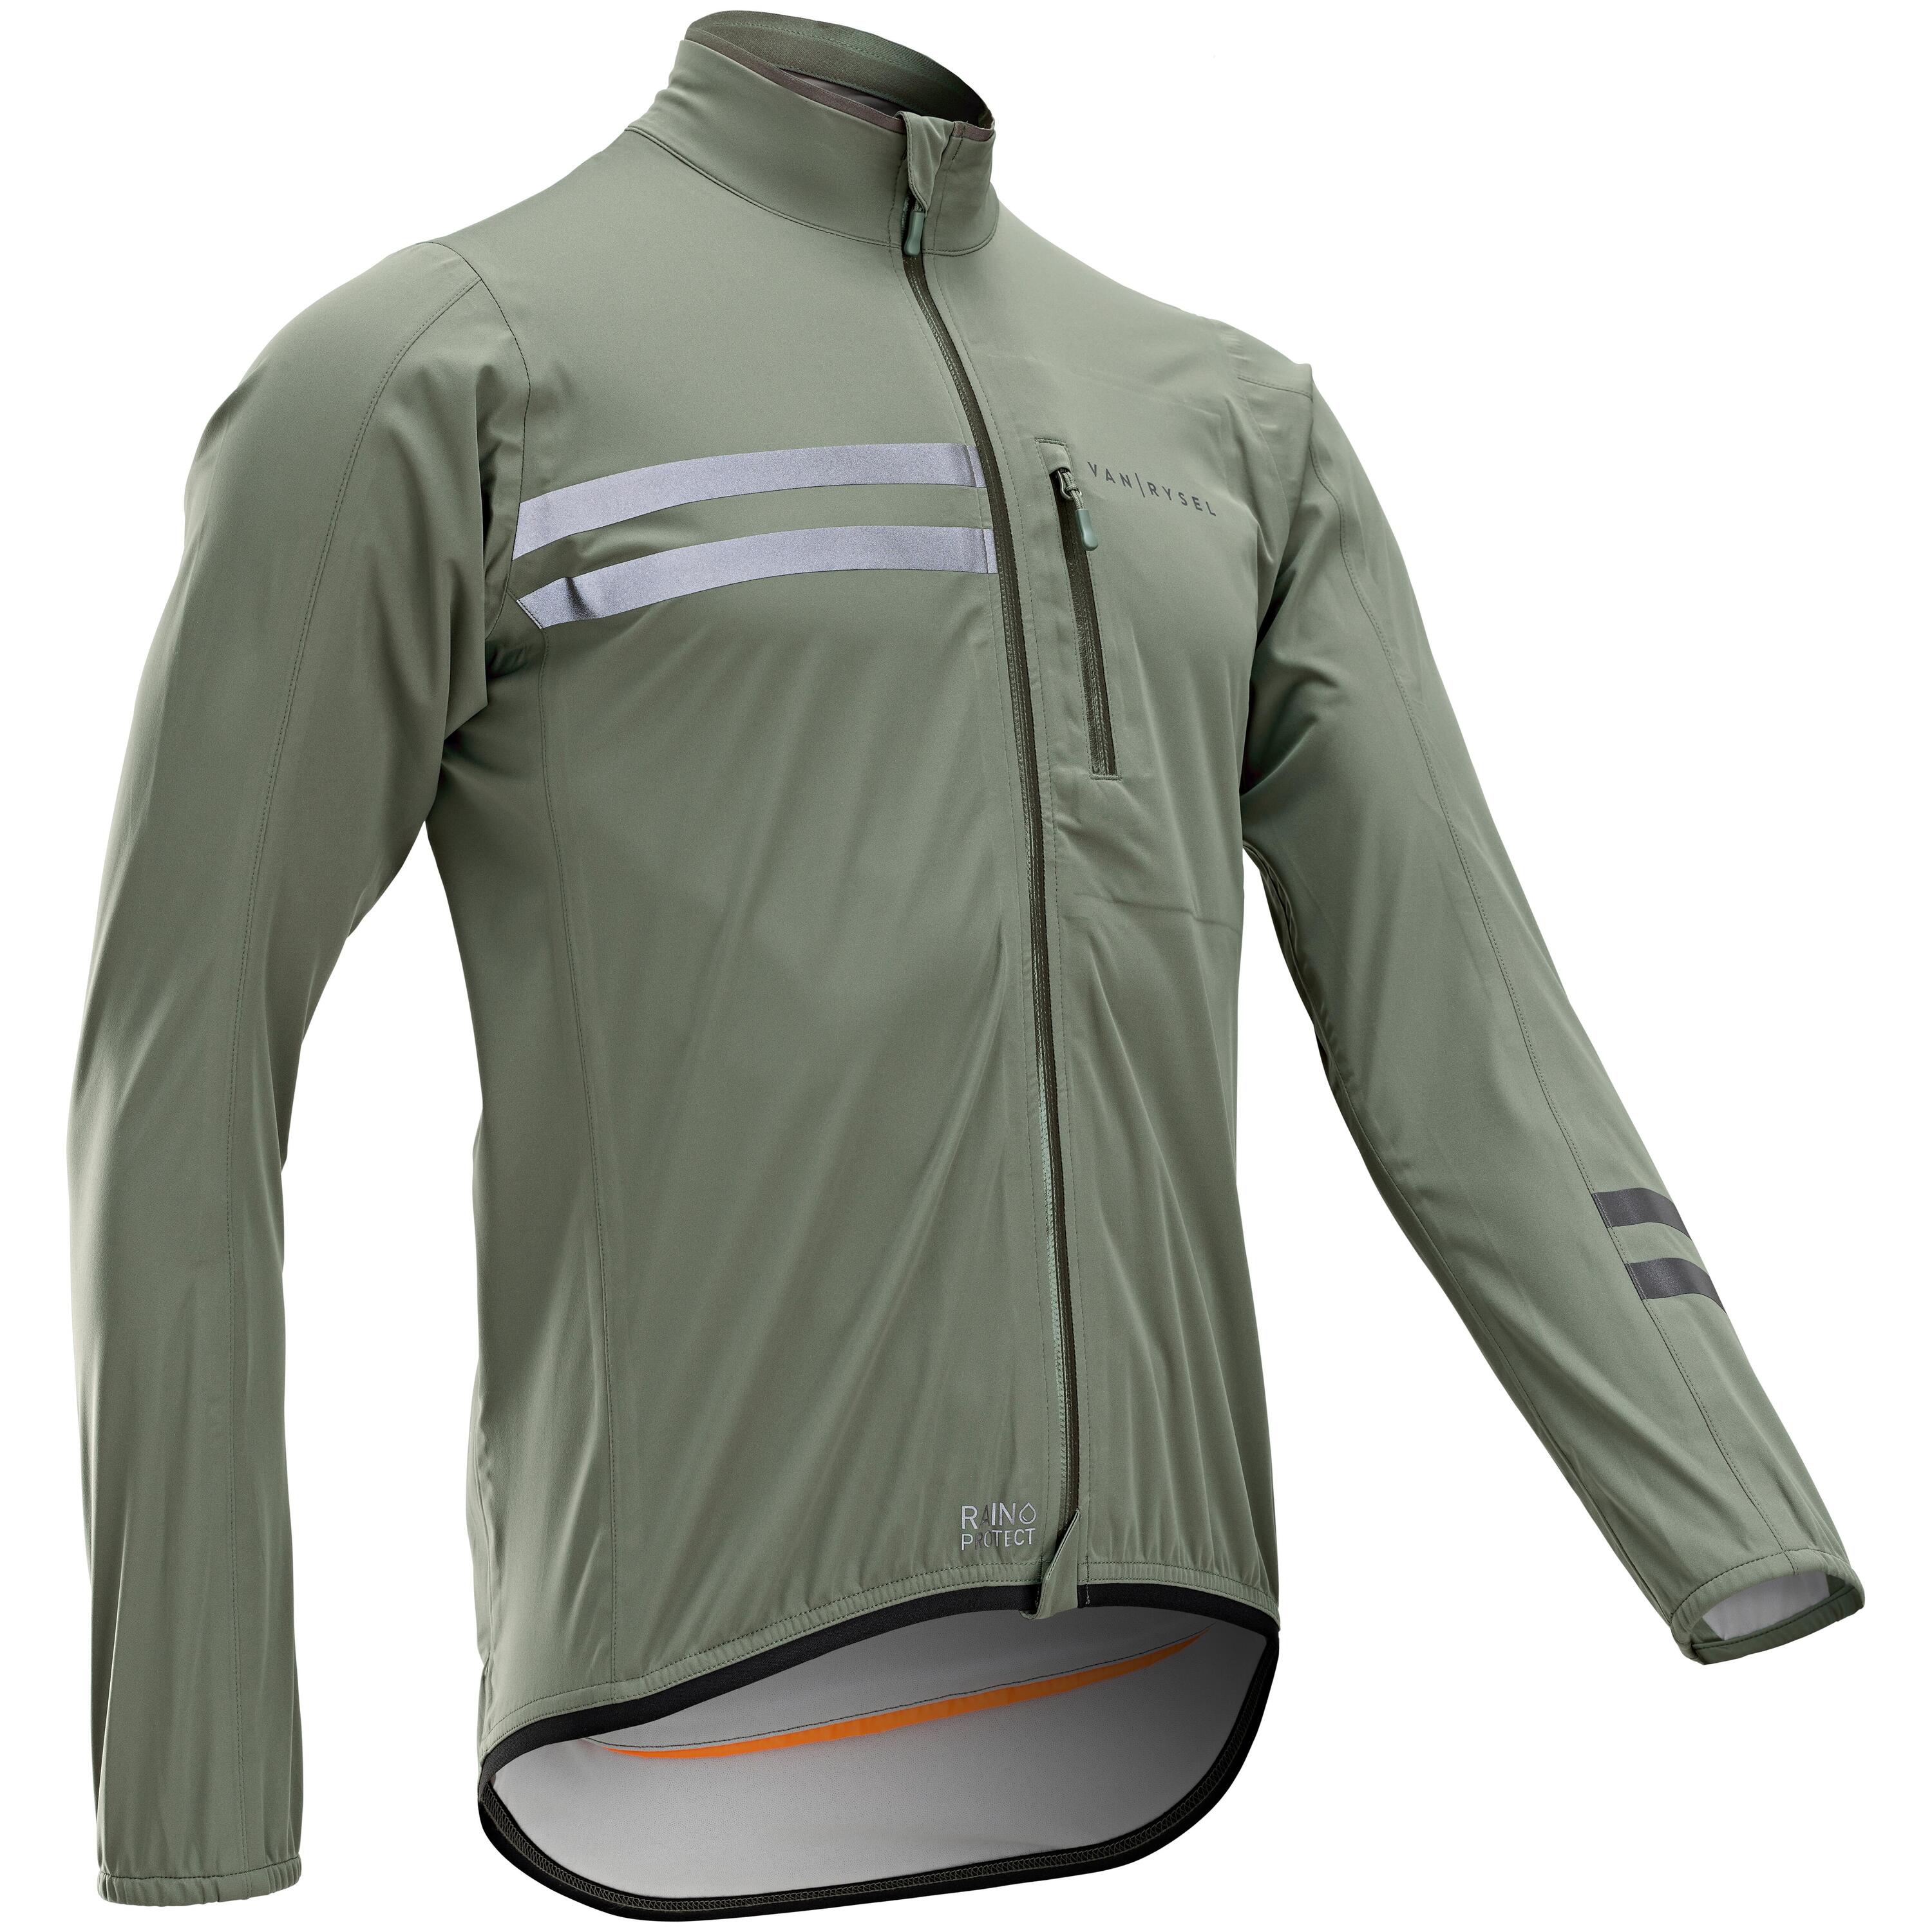 Men's Long-Sleeved Showerproof Road Cycling Jacket RC 500 - Khaki 2/8